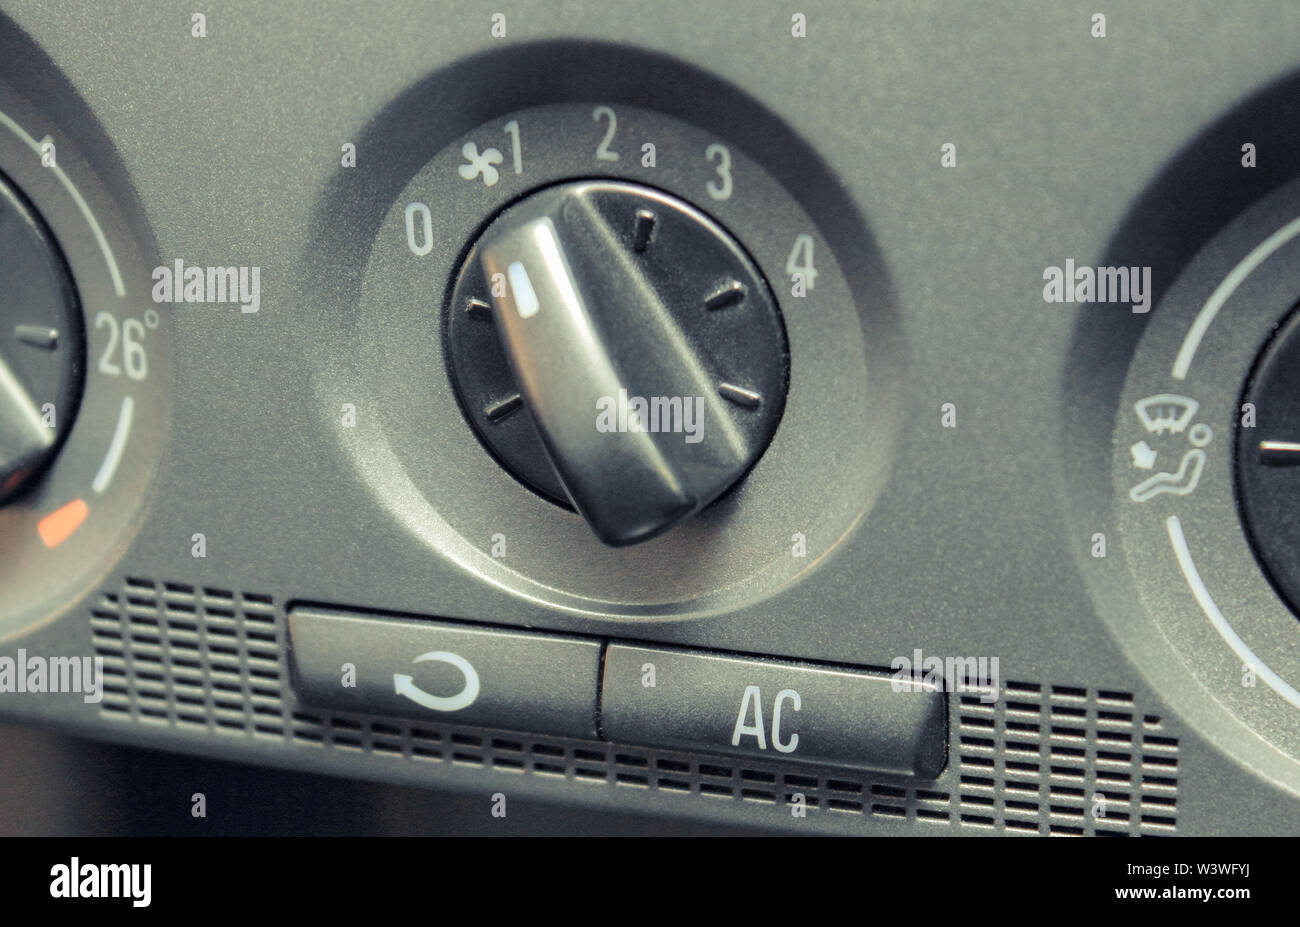 Car ventilation -Fotos und -Bildmaterial in hoher Auflösung – Alamy